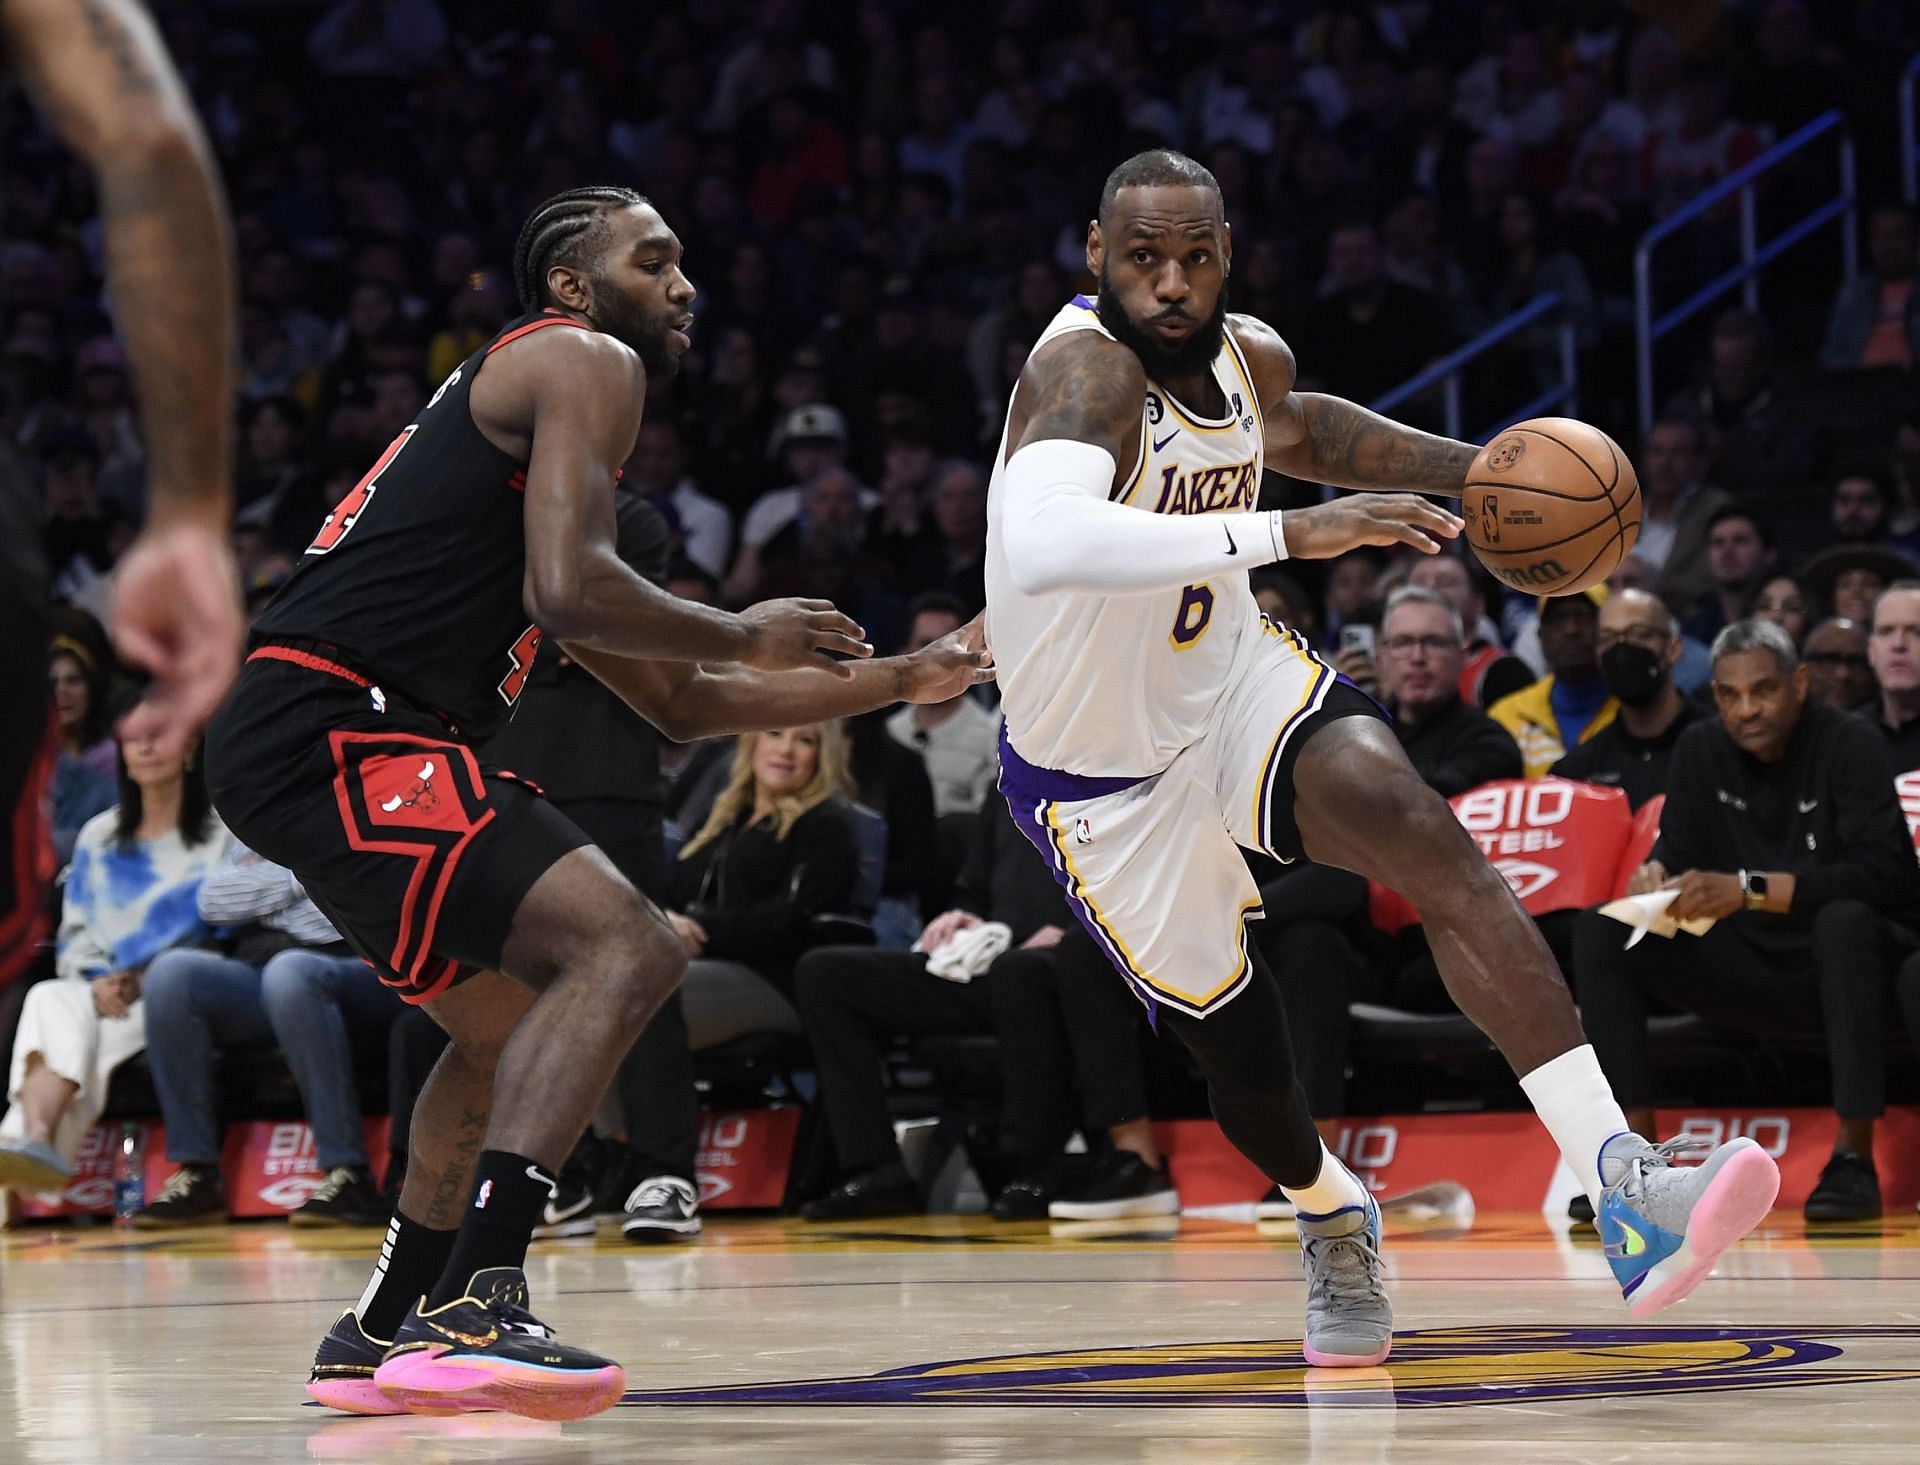 LA Lakers star forward LeBron James